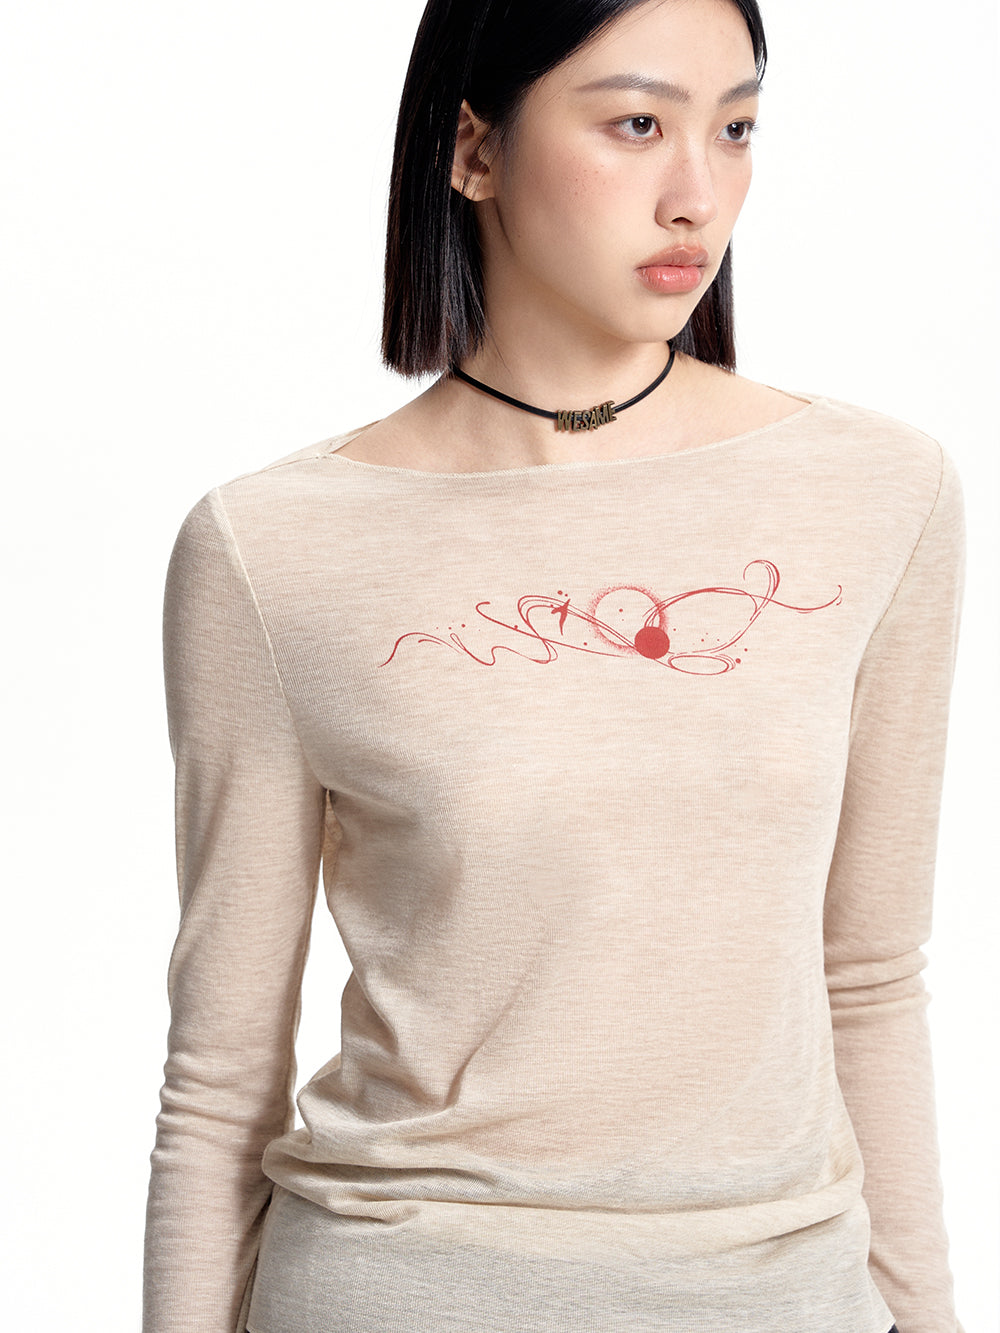 MUKTANK x WESAME Printed Round Neck Long Sleeve Base Layer T-shirt for Women